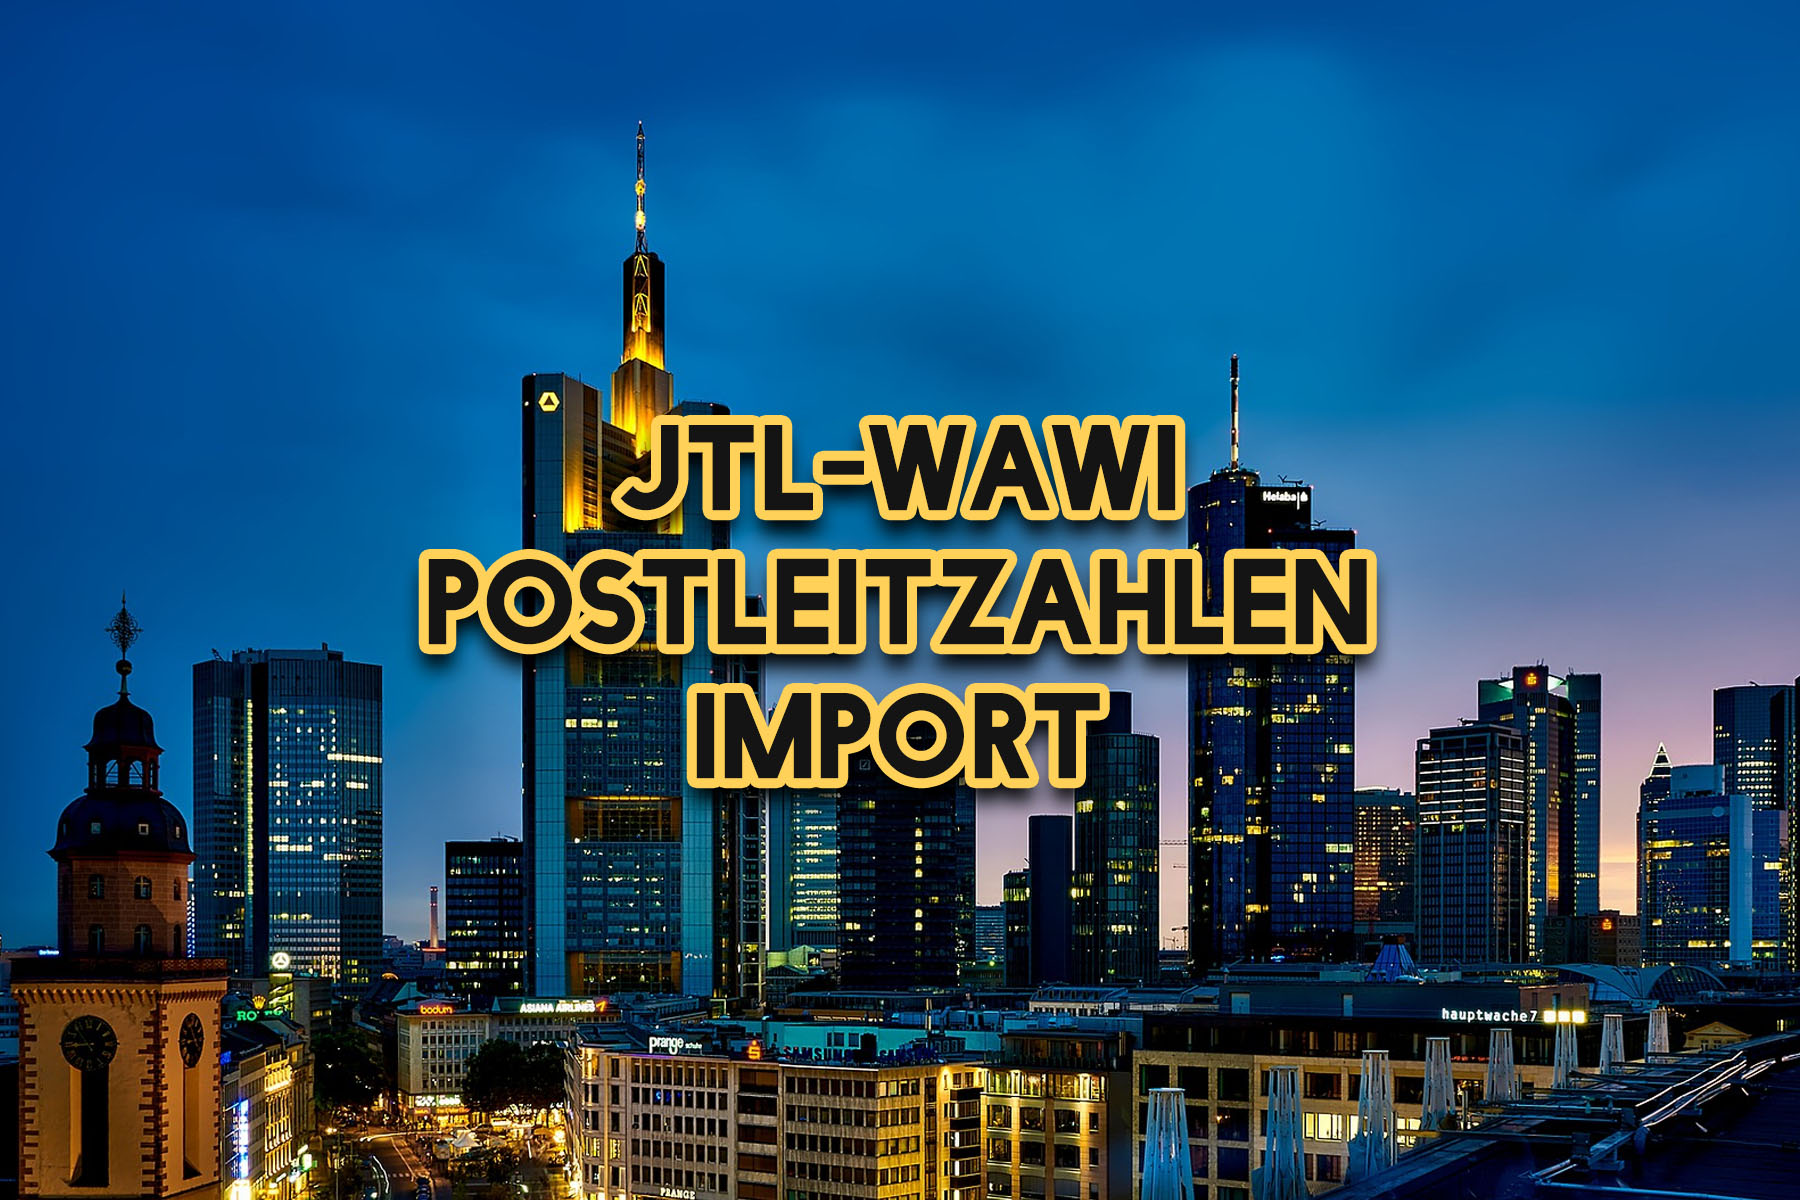 JTL-Wawi postal codes import